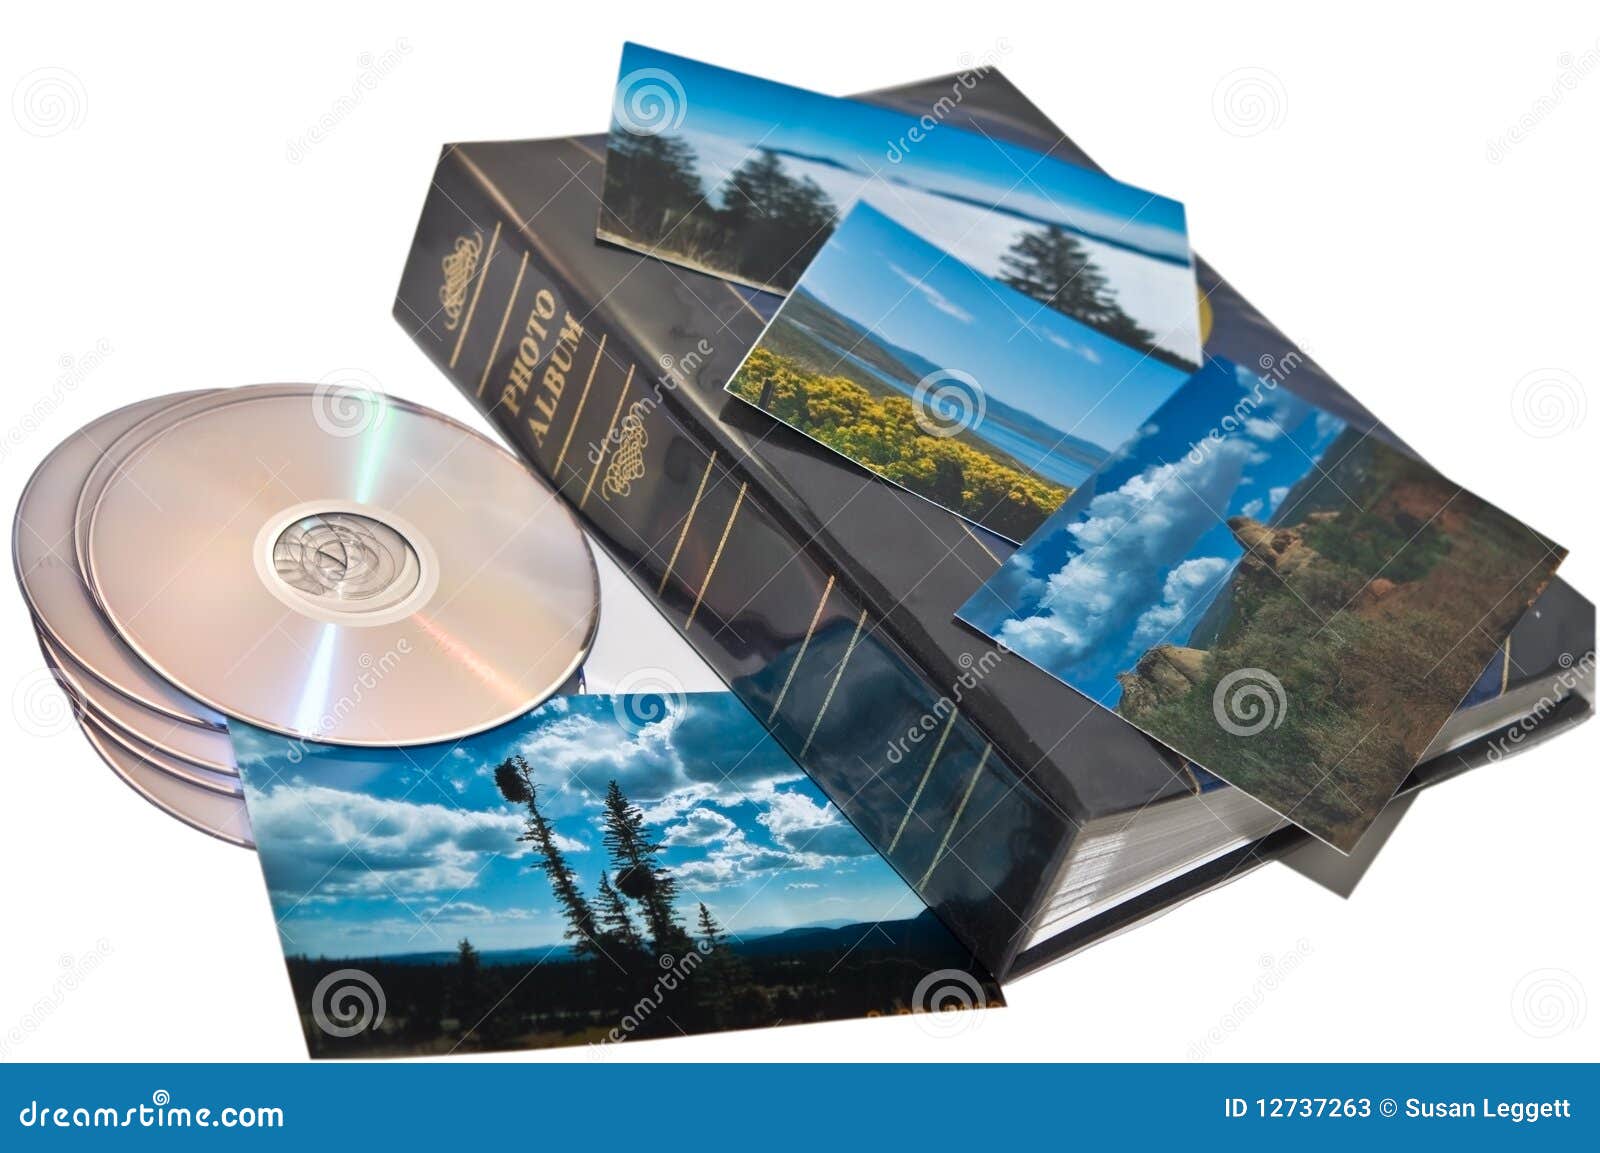 travel photos cd and album